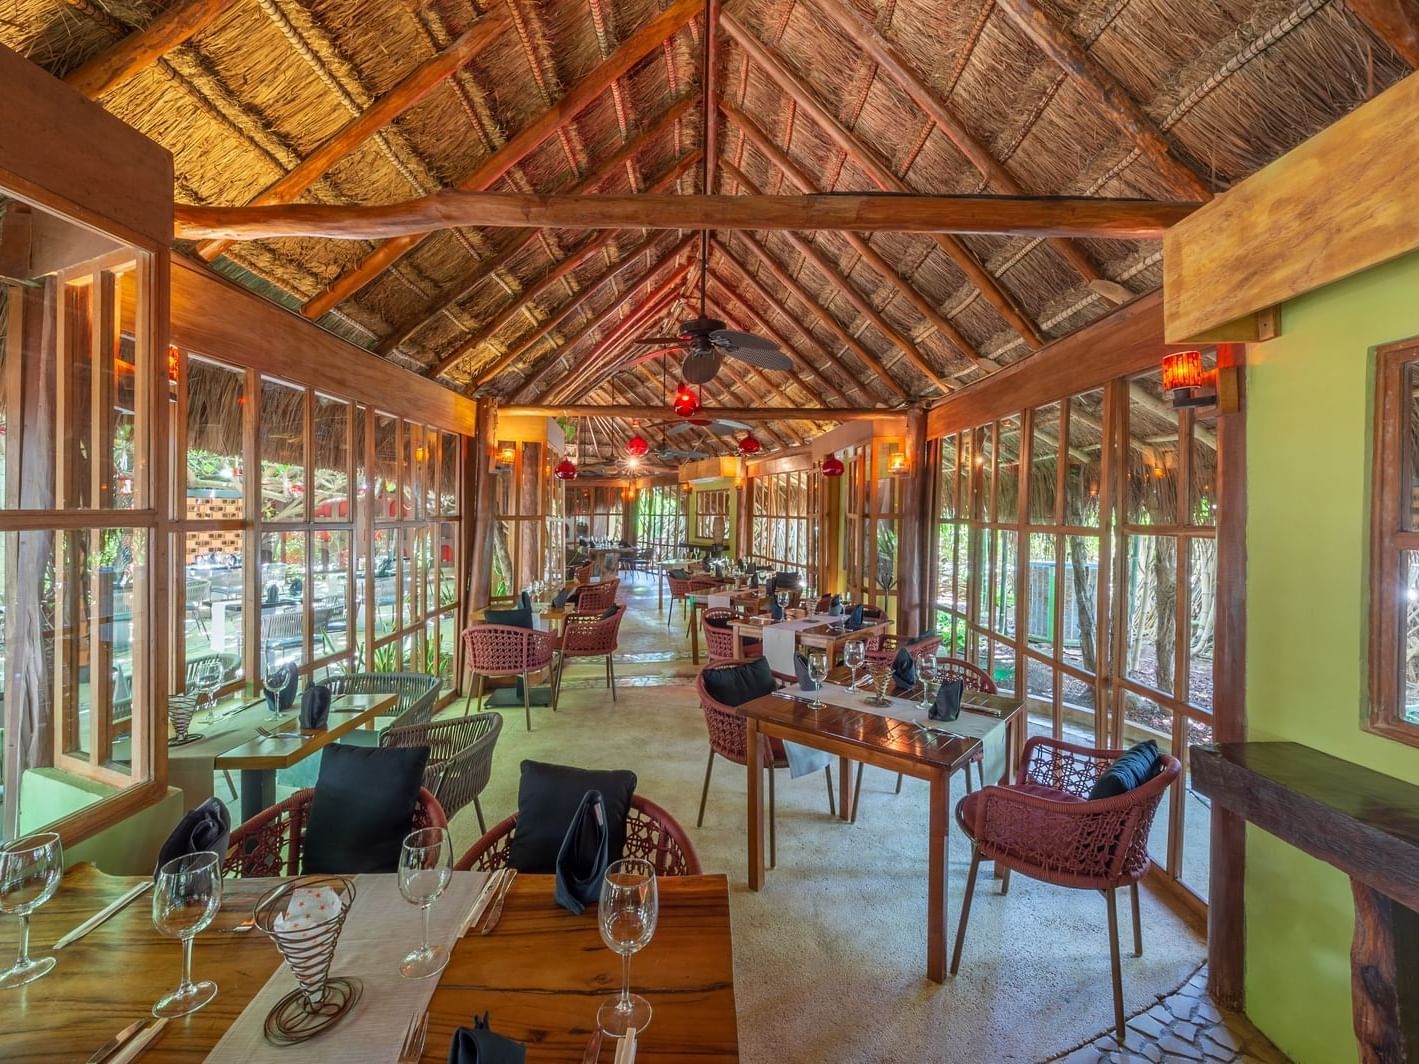 Hidden Garden restaurant with a straw canopy roof, La Colección